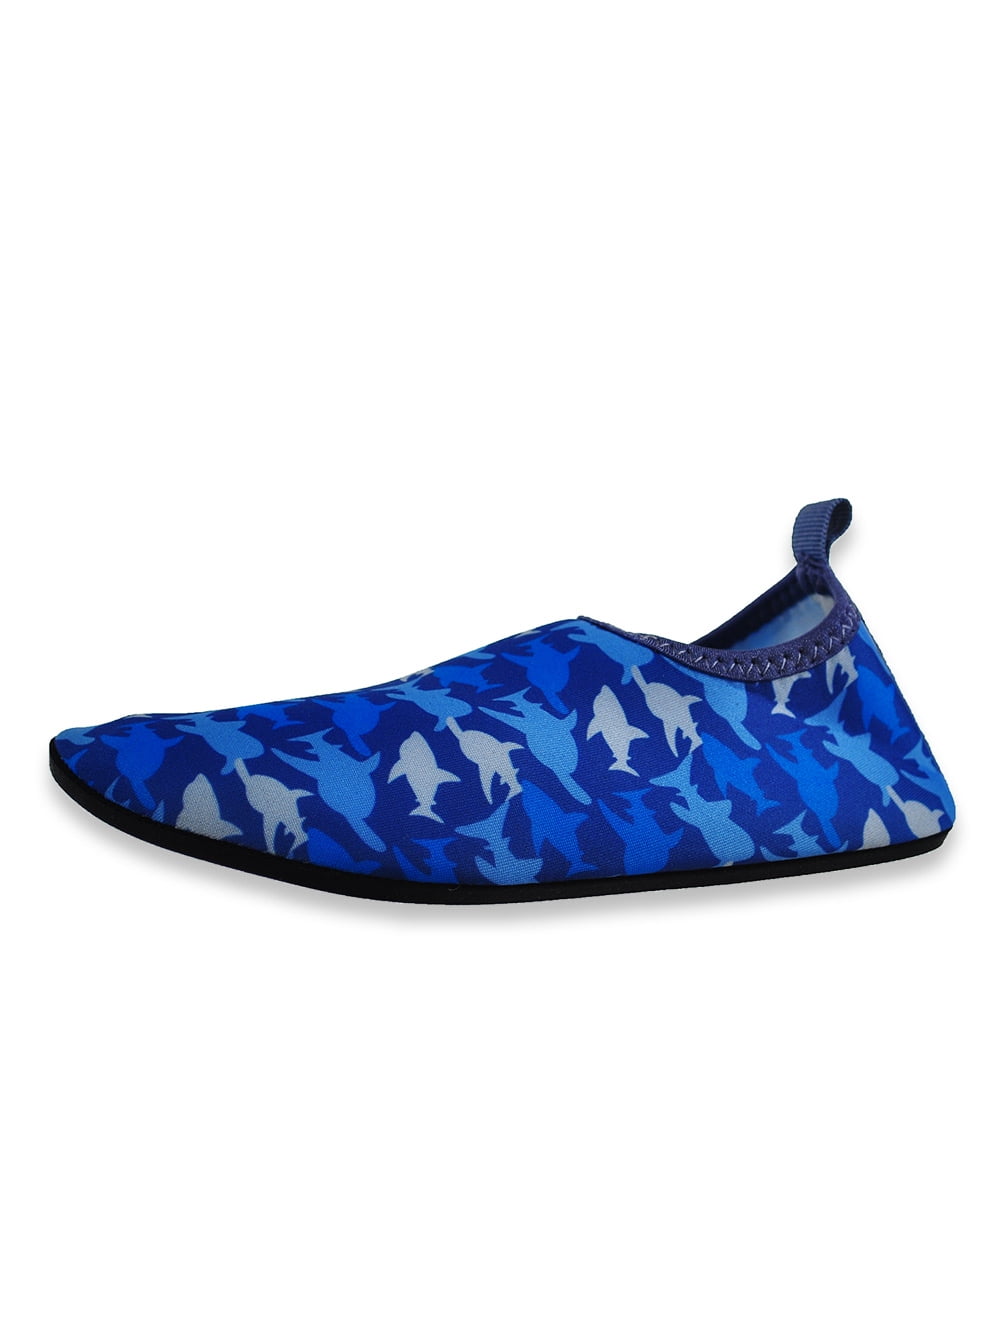 shark swim shoes